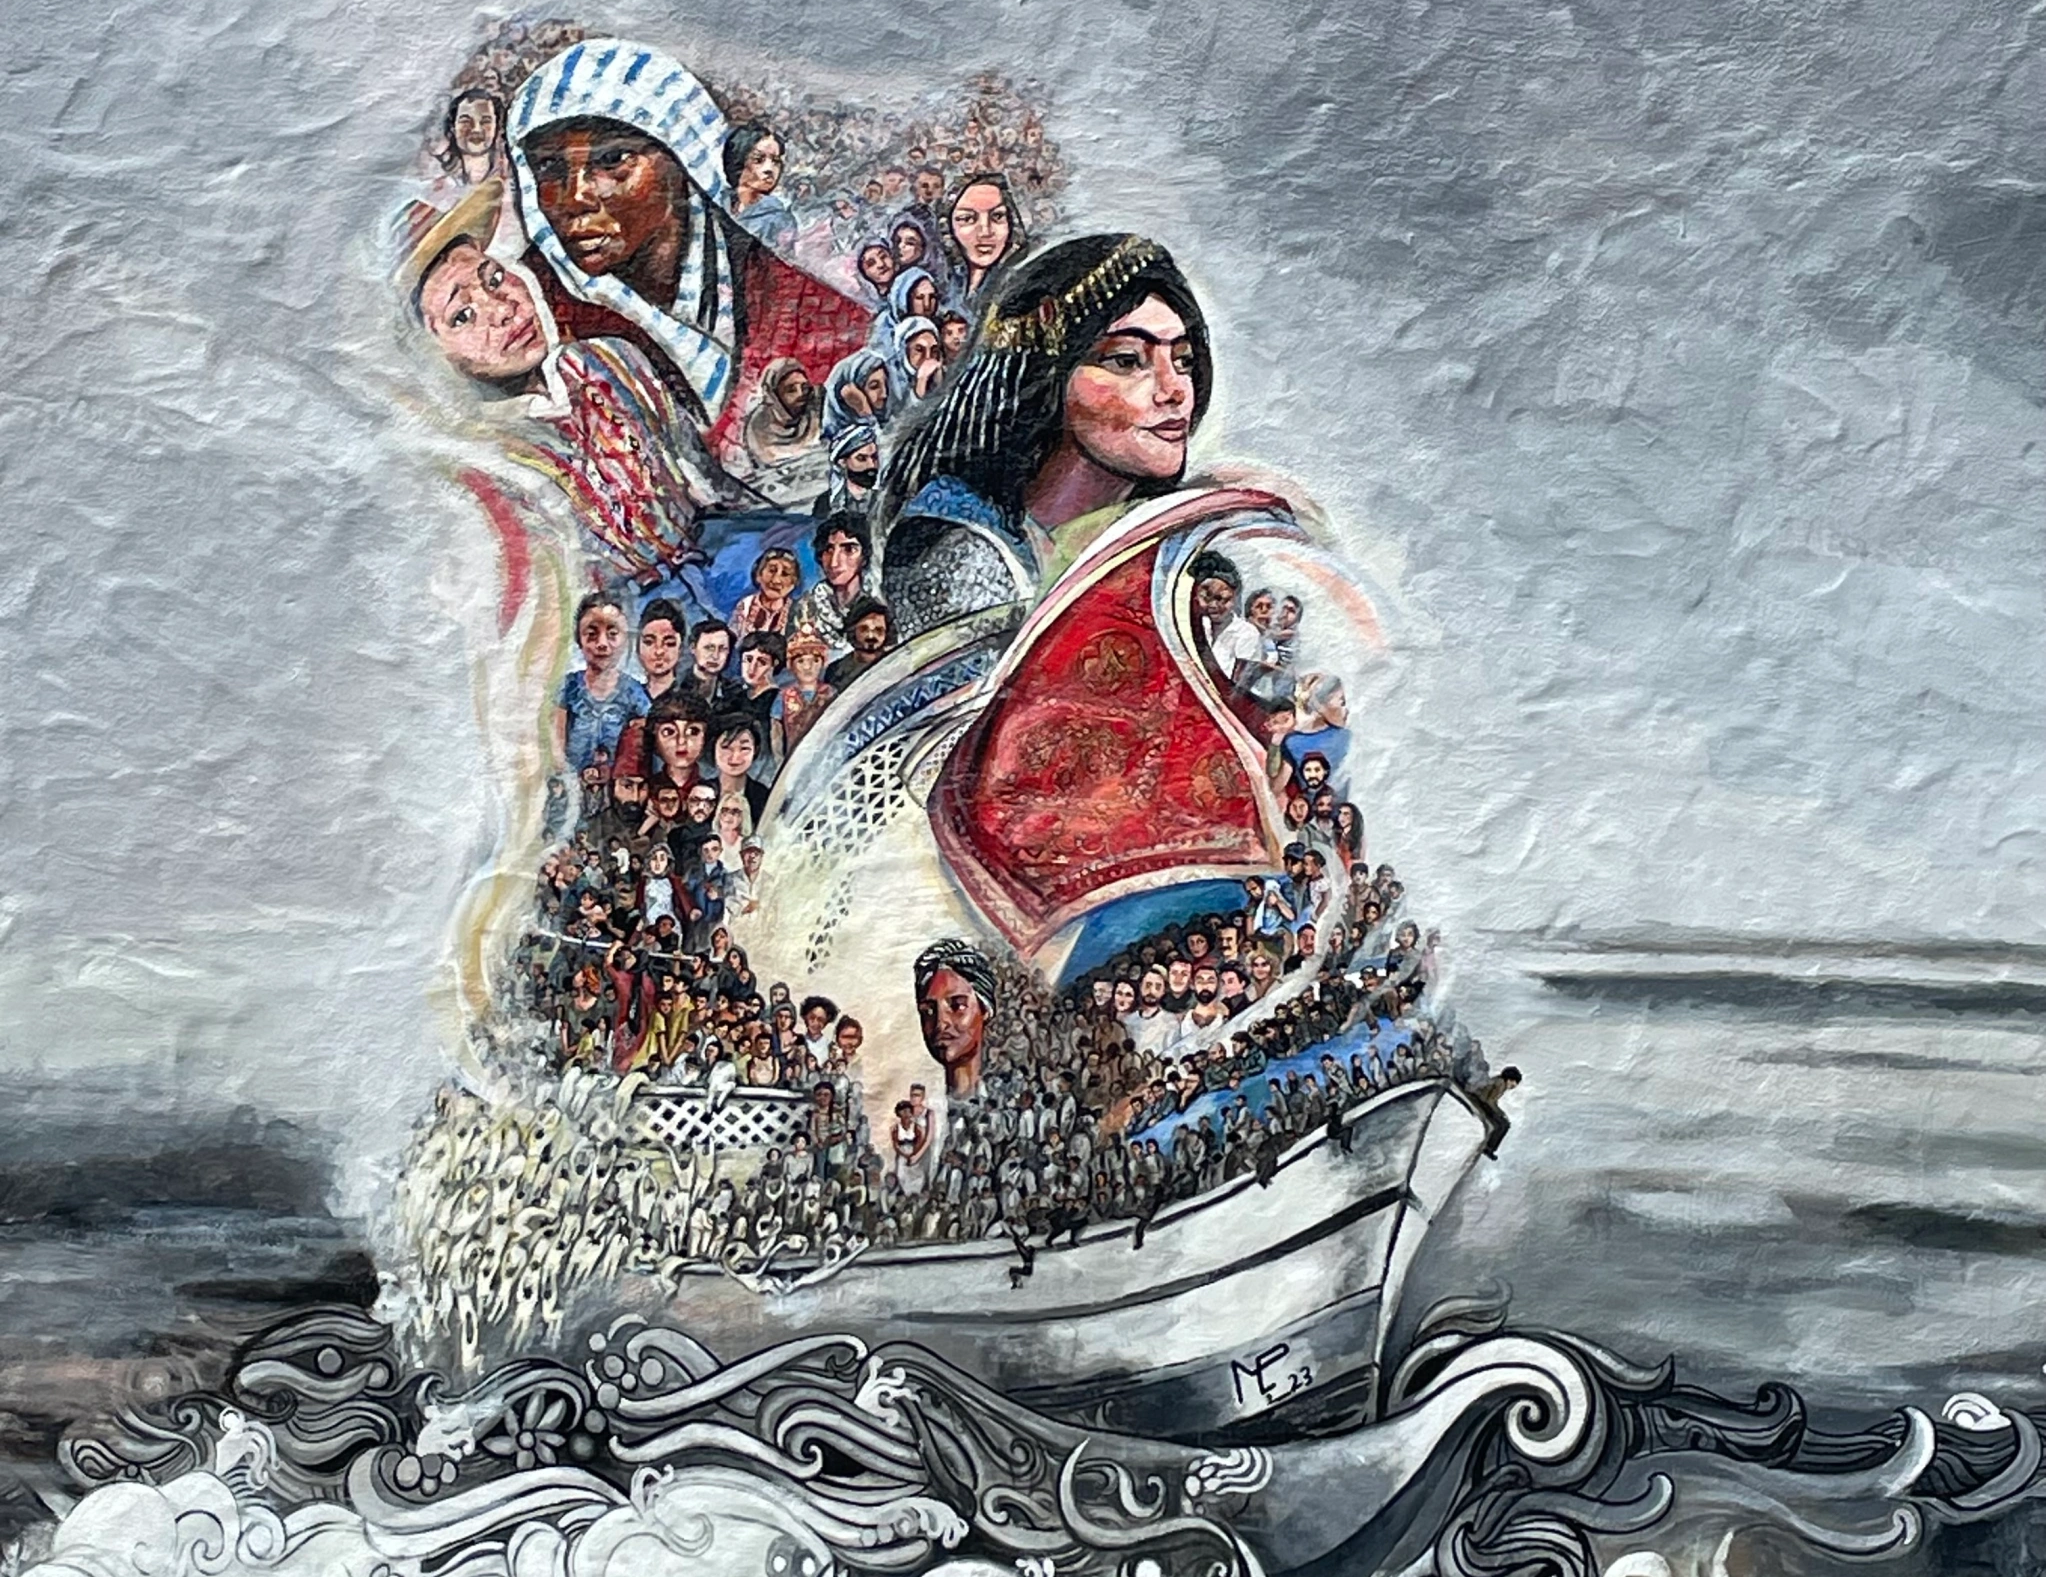 Mural of people on a boat crossing stormy seas